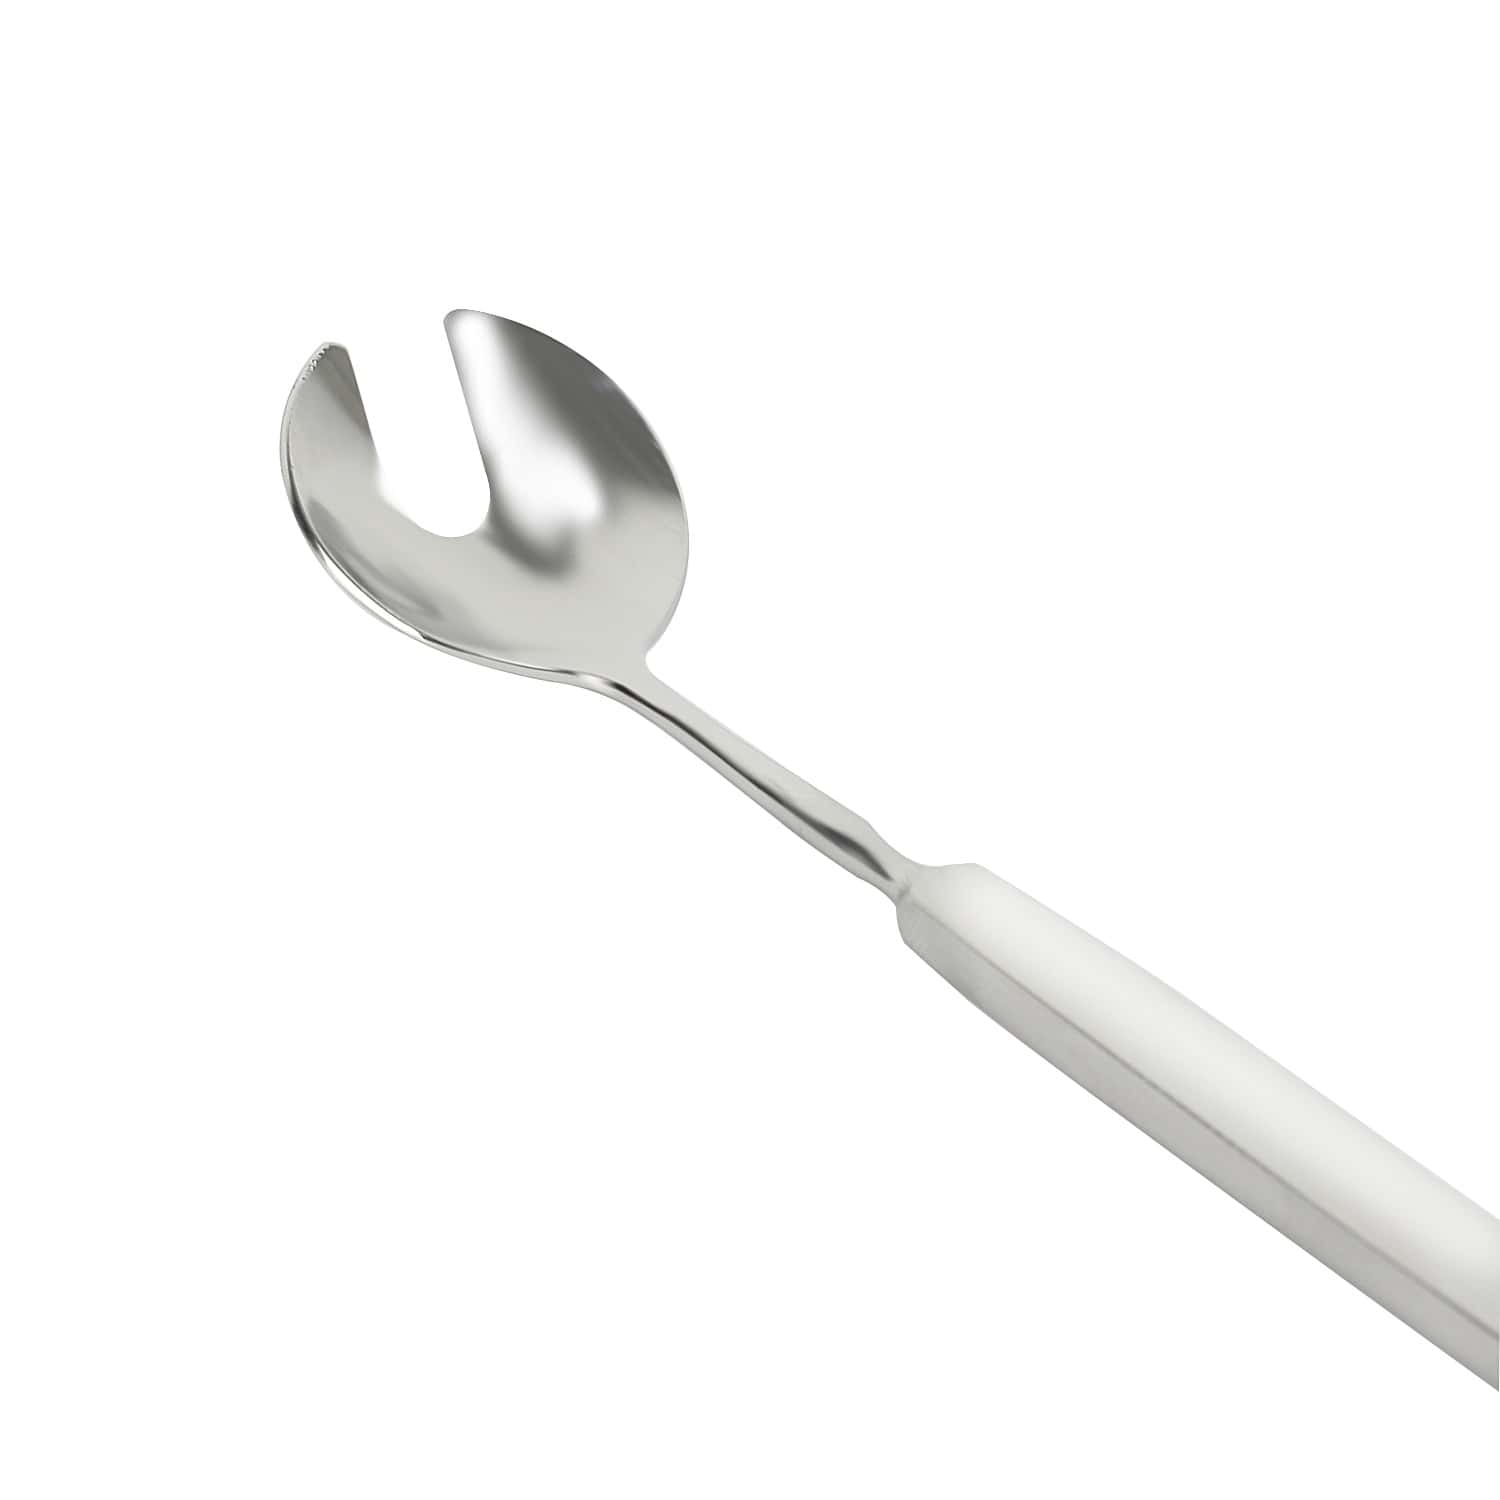 Enuclation spoon